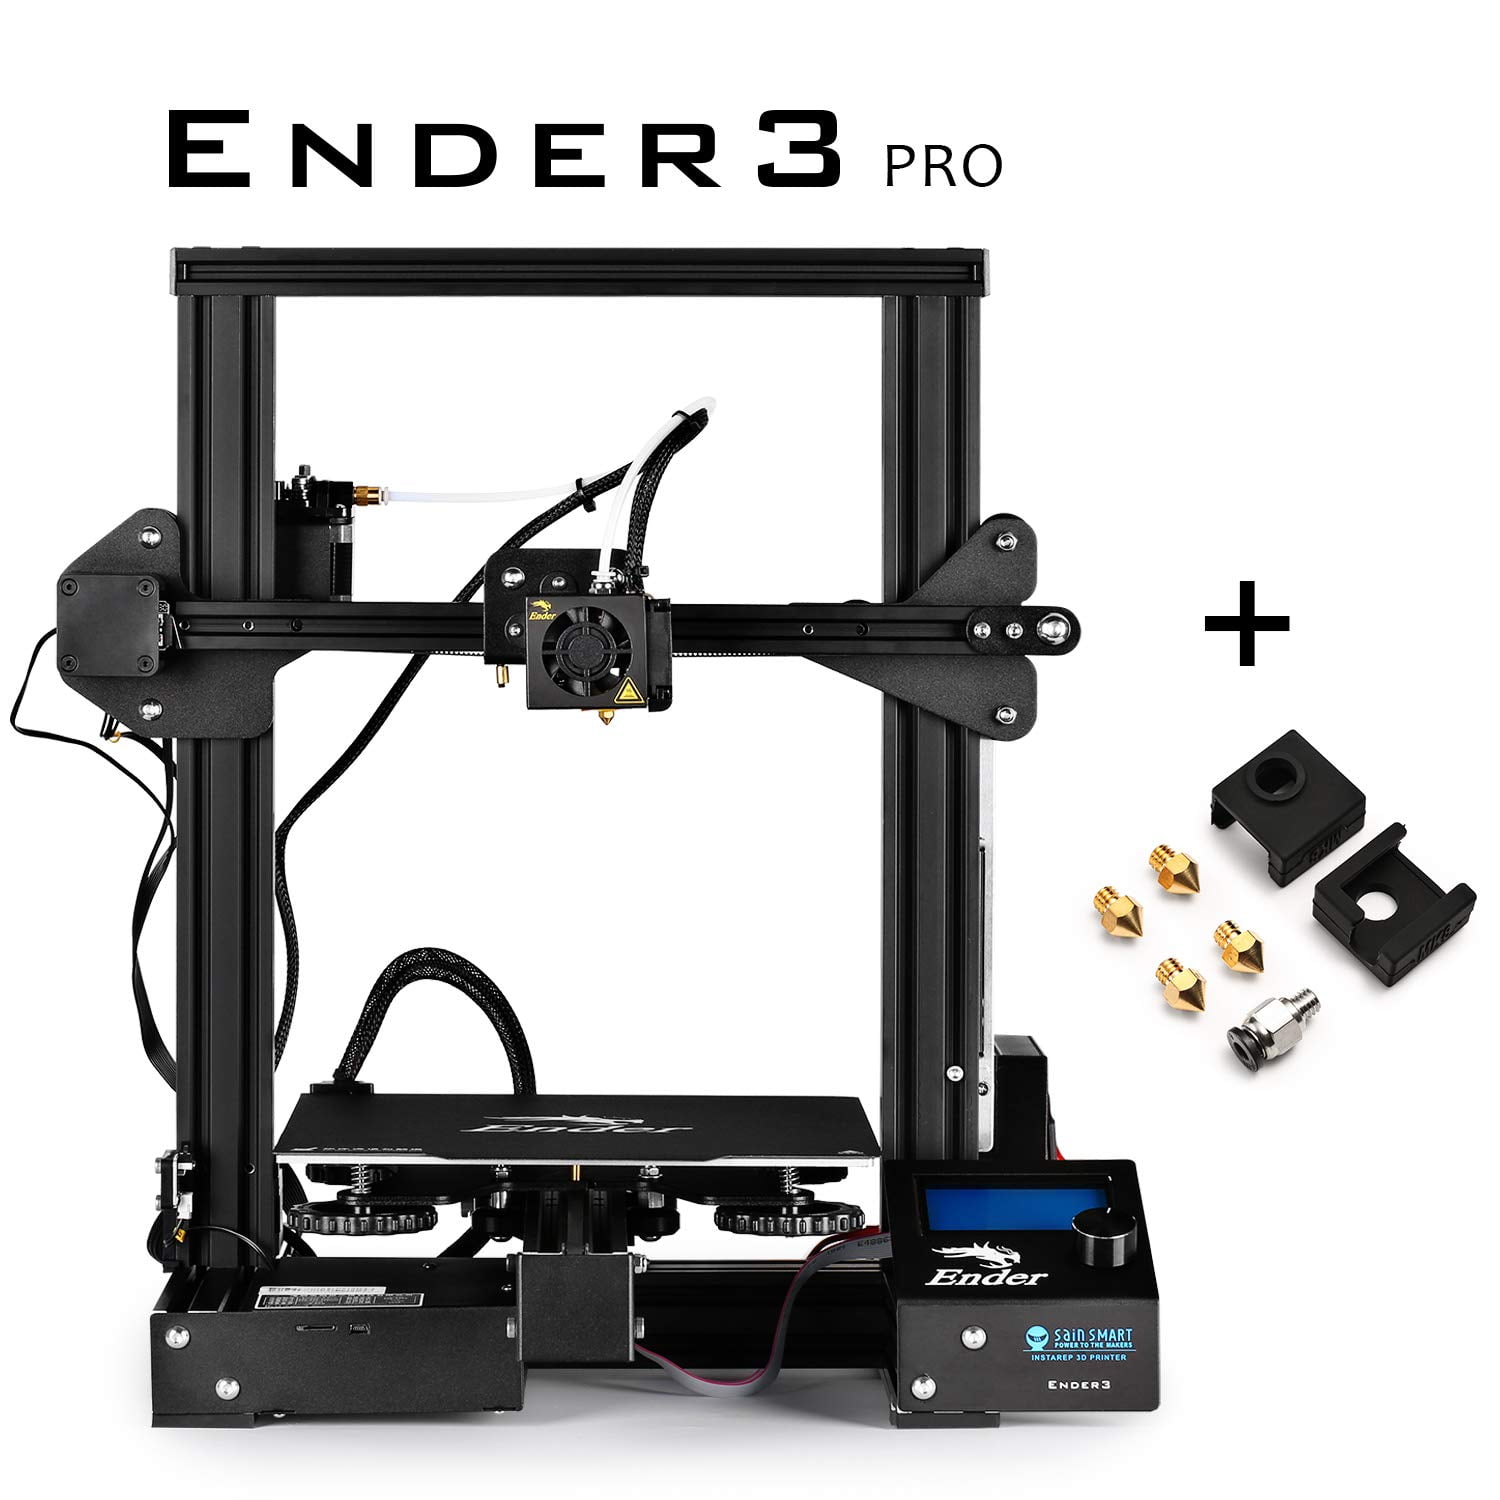 Comgrow Official Creality Ender 3 3d Printer. Принтер Ender 3 Pro сборка. 3d принтер Ender 3 уровень. Creality Ender 3 Pro купить. Принтер ender 3 pro